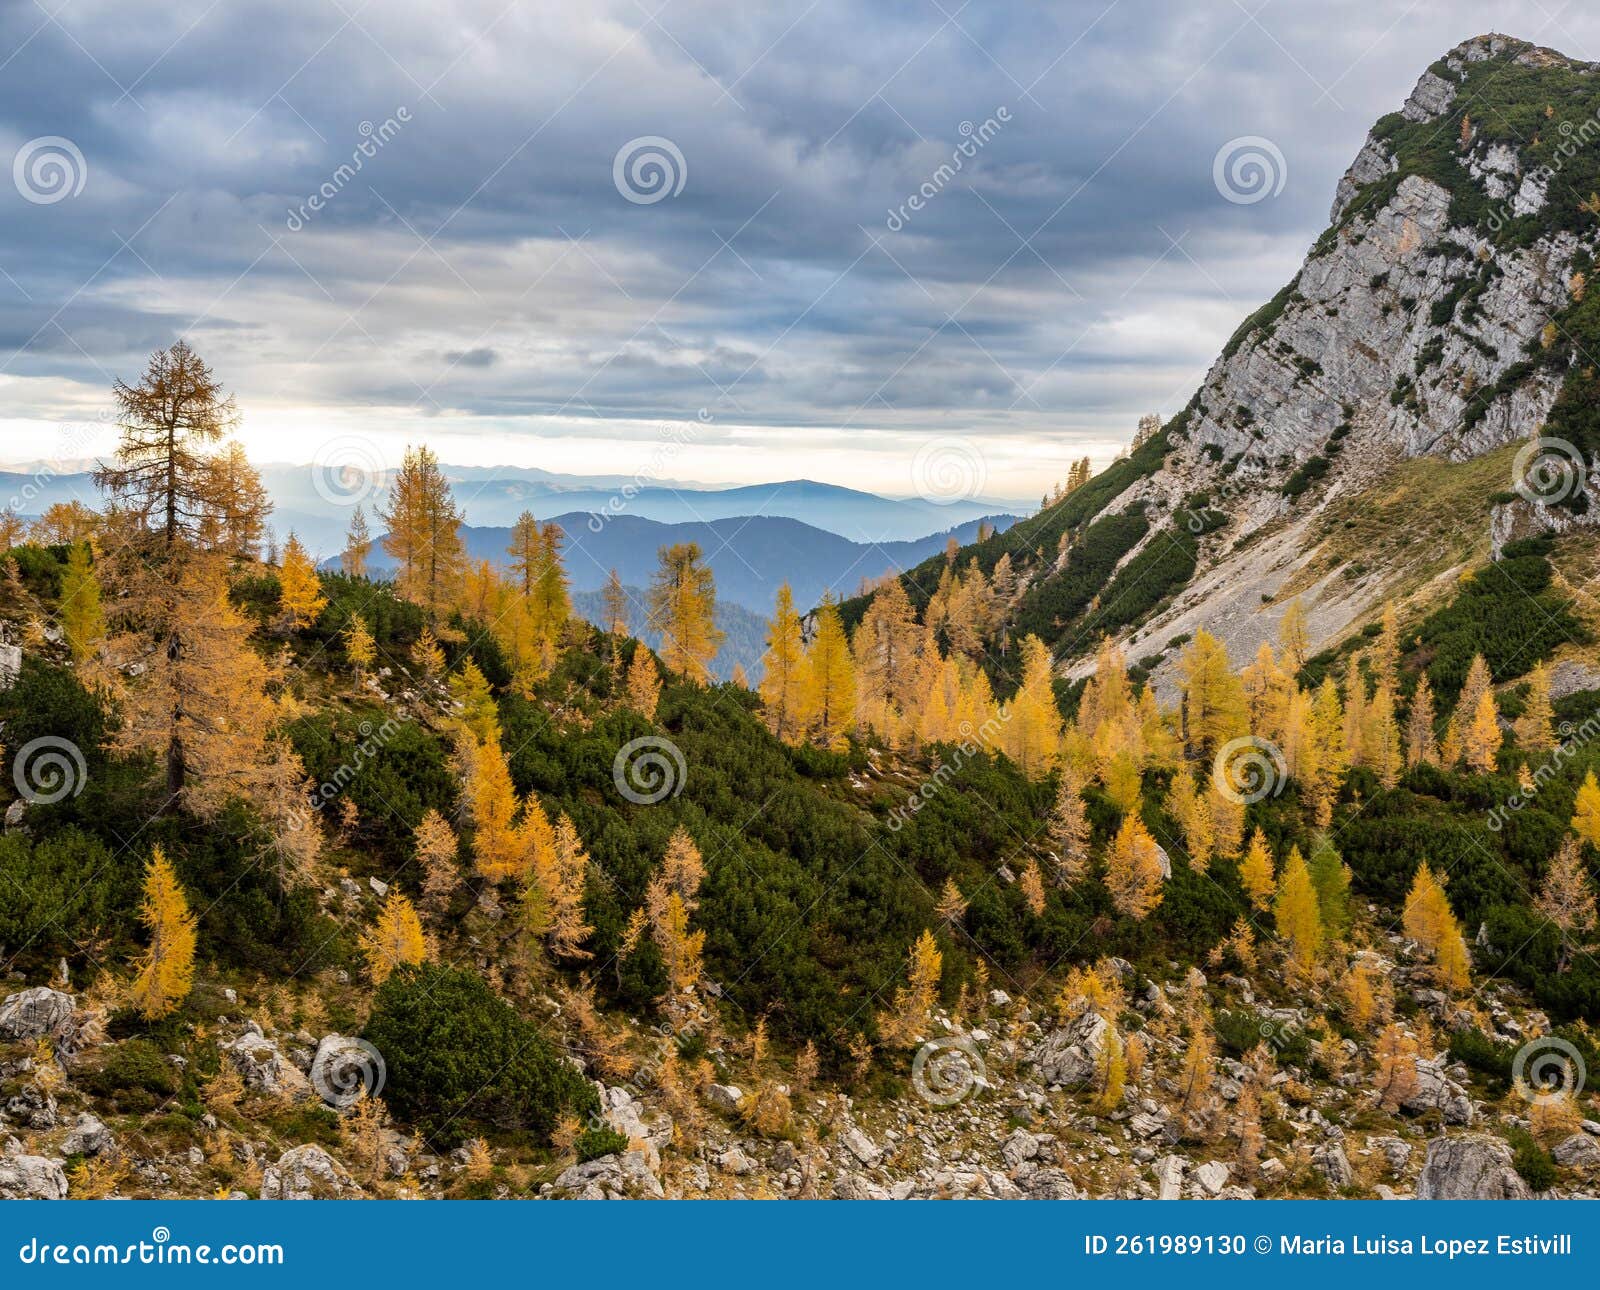 view of mountains from slemenova spica, eslovenia